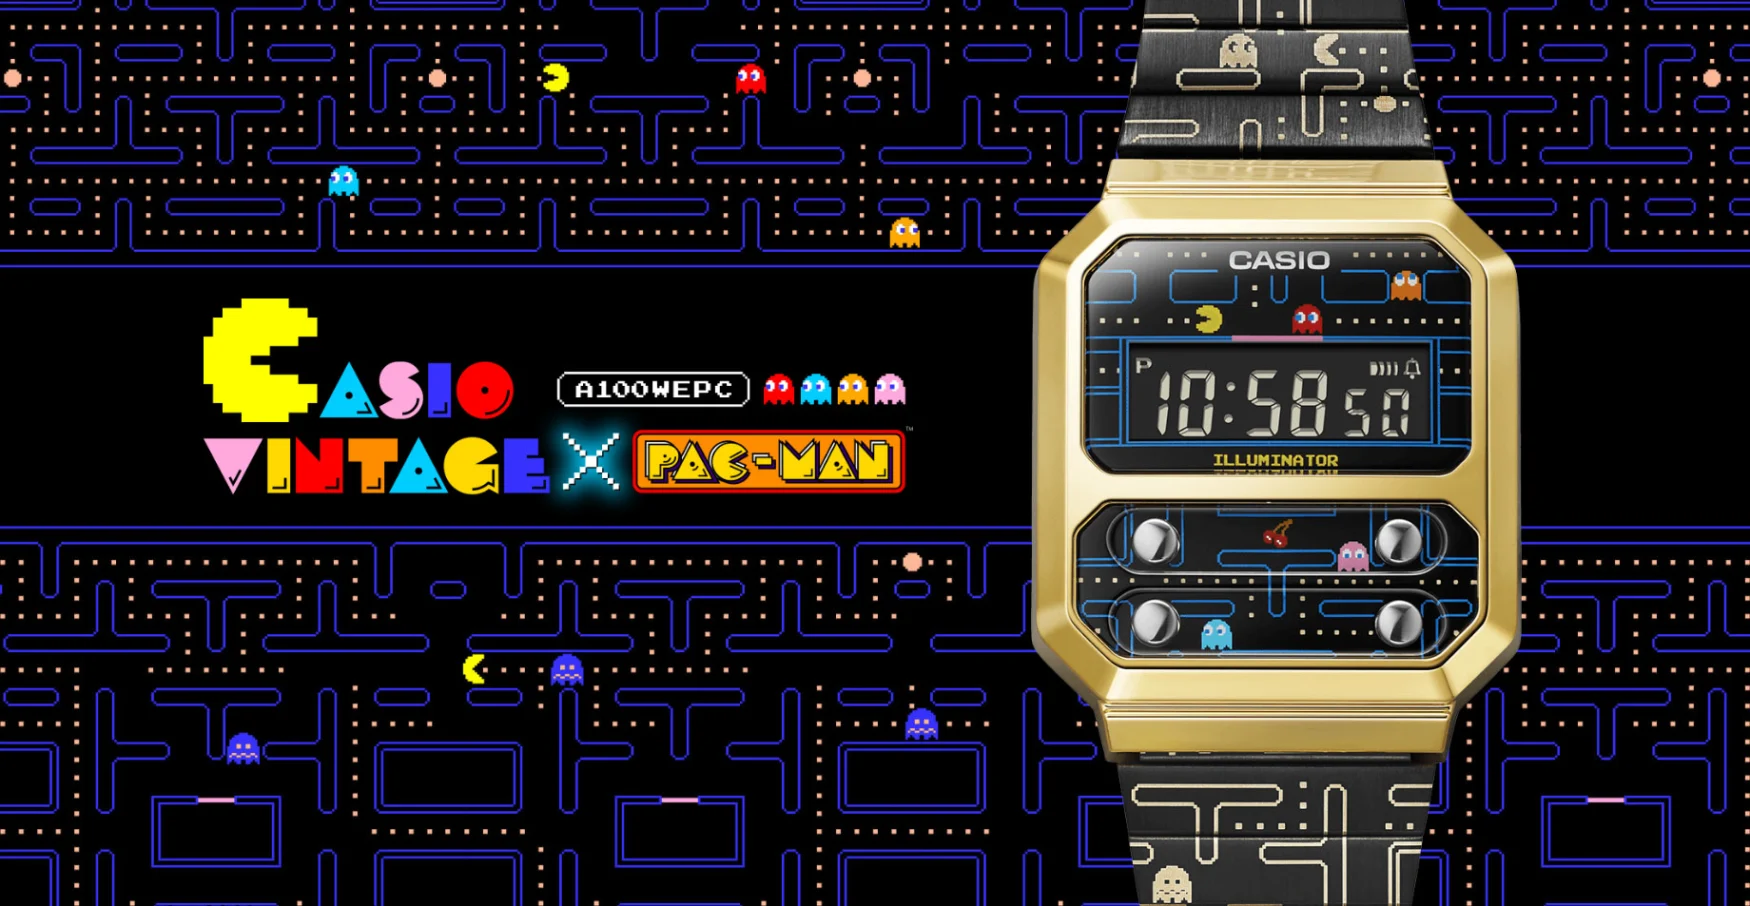 Casio unveils the Pac-Man edition A100 digital watch